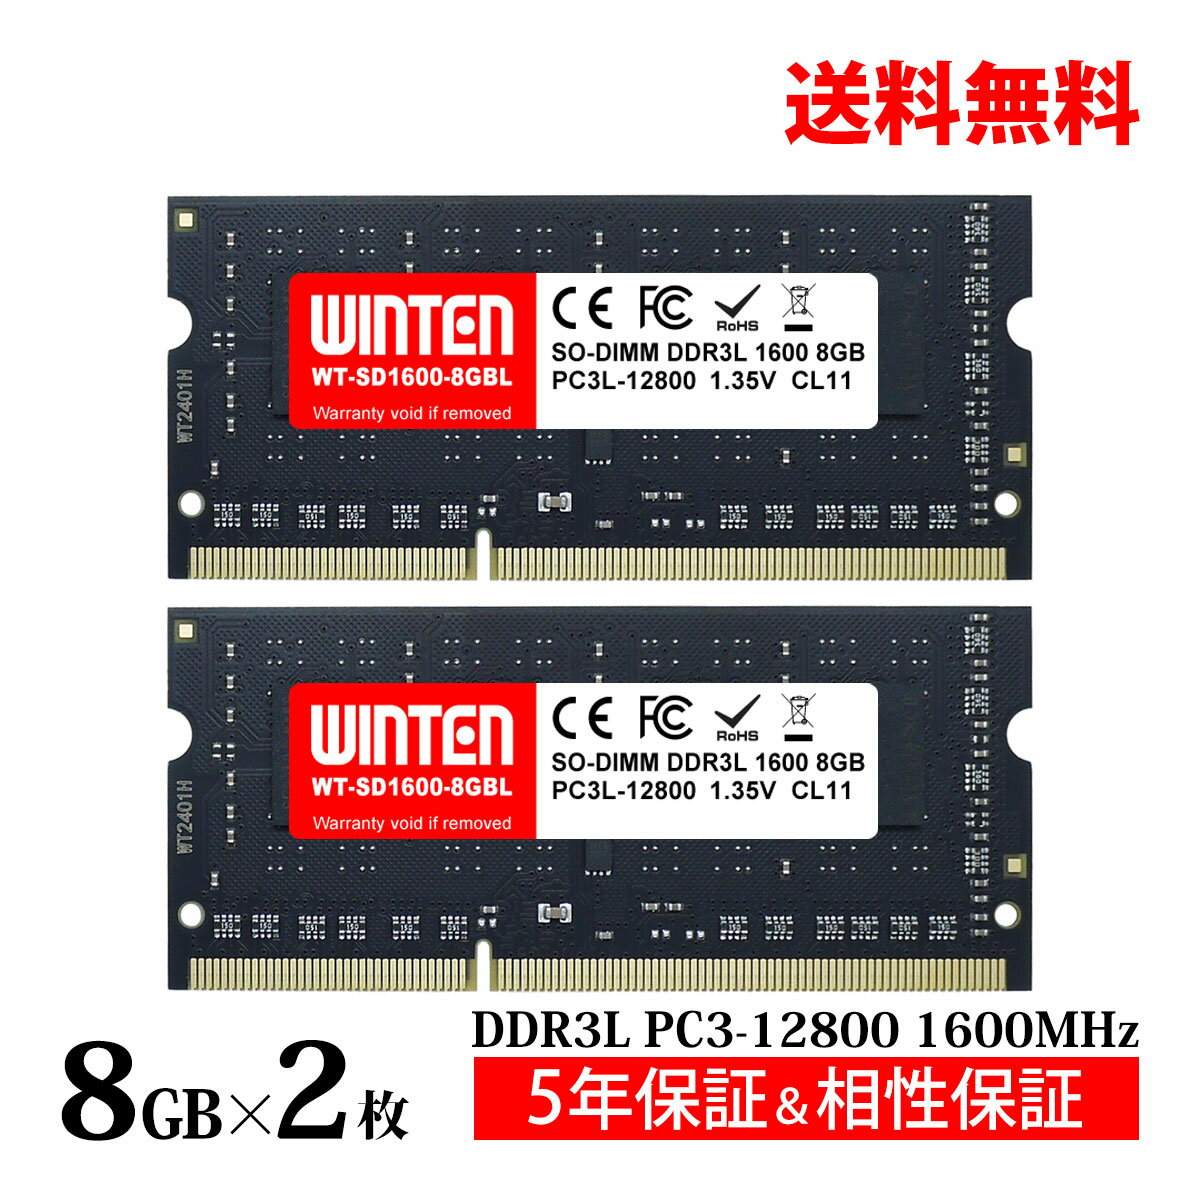 m[gPCp  16GB(8GB~2) PC3L-12800(DDR3L 1600) WT-SD1600-D16GBL ۏ i5Nۏ   o dΉ DDR3L SDRAM SO-DIMM [ ݃[ 5648